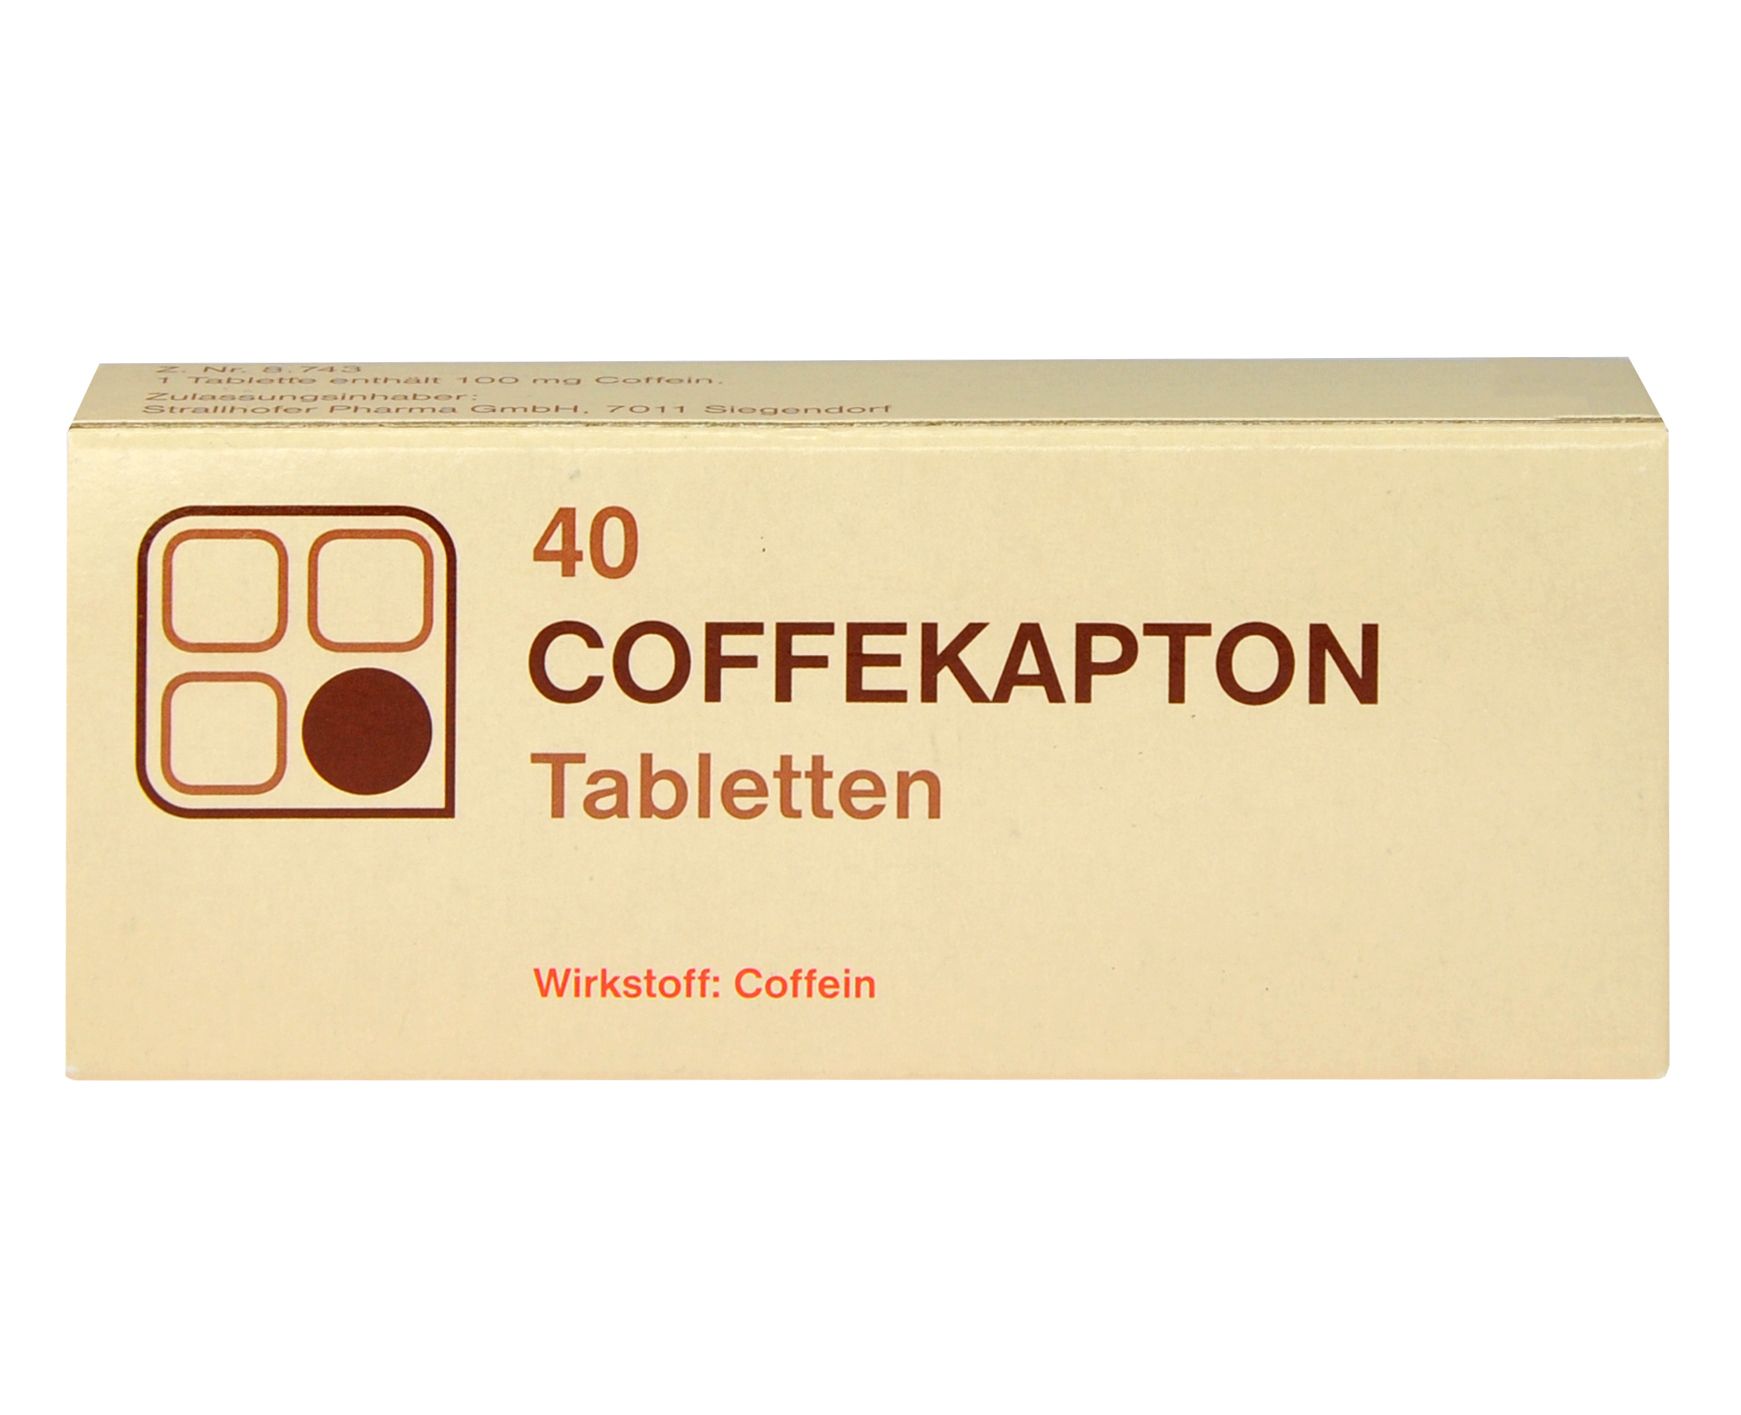 Abbildung Coffekapton 100 mg - Tabletten